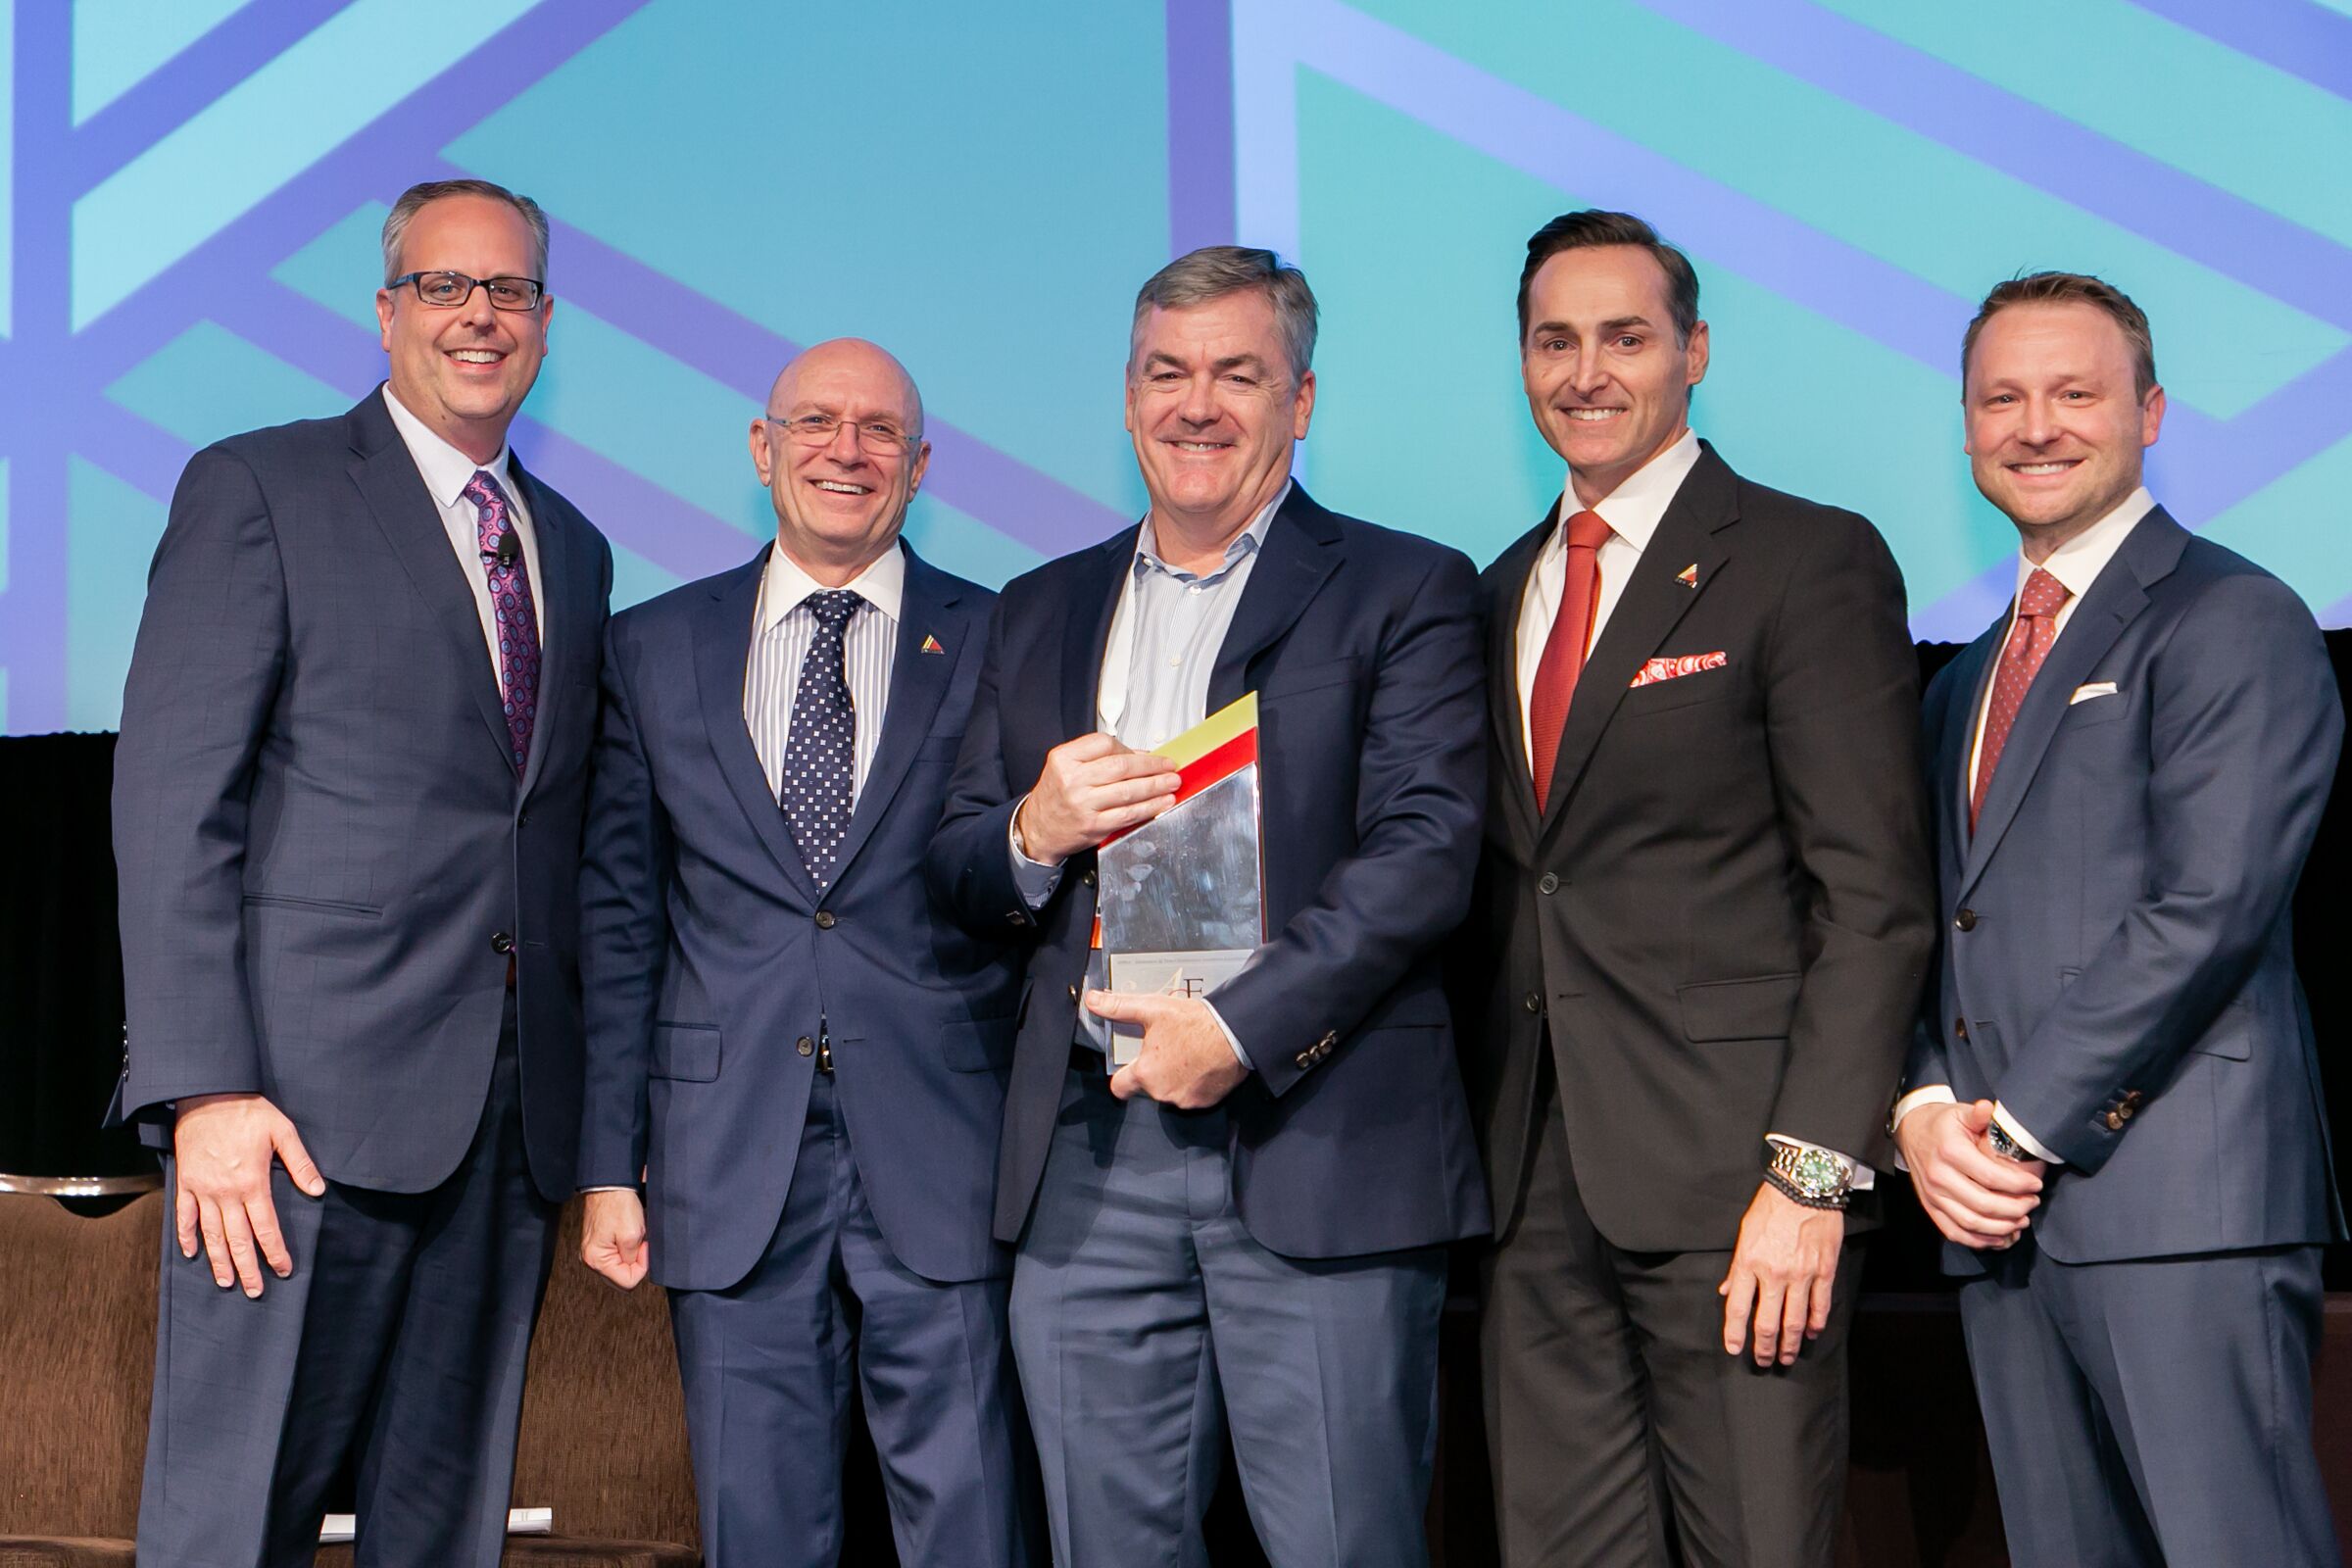 ADISA Names Award Winners at 2019 Annual Conference in Las Vegas